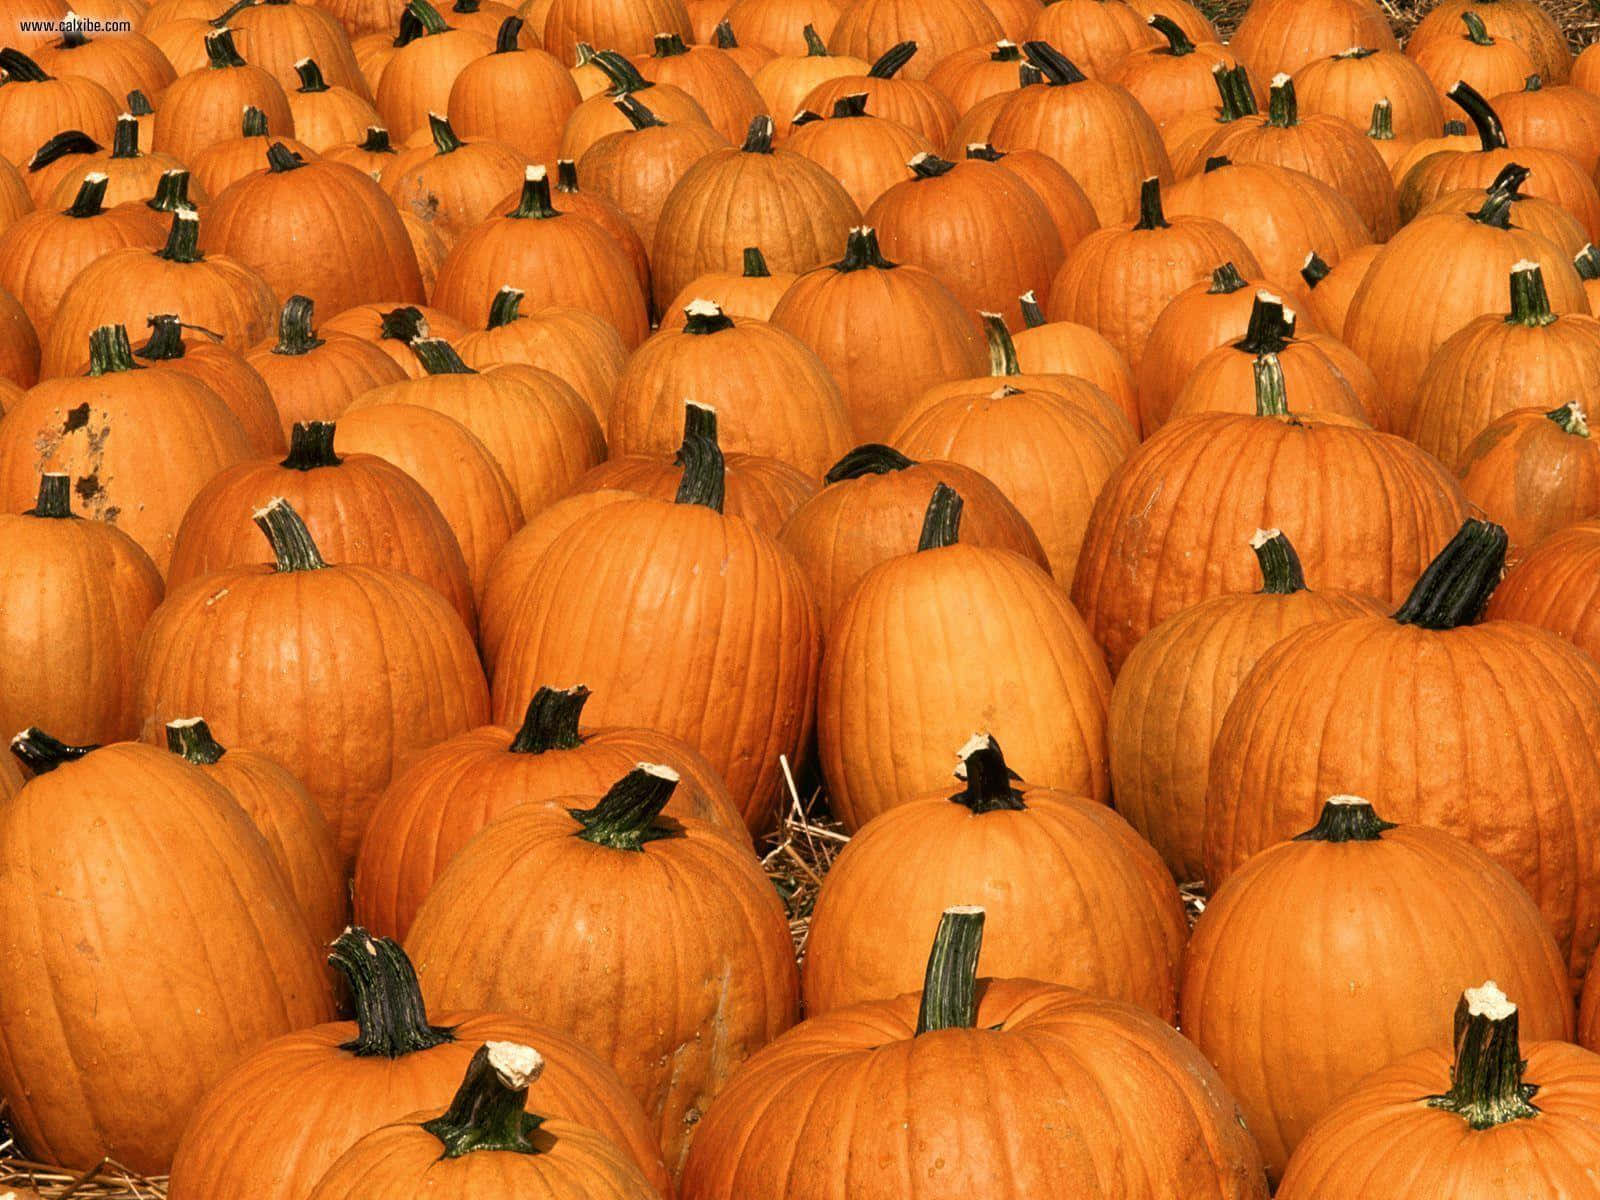 "An Inviting Fall Pumpkin Scene" Wallpaper